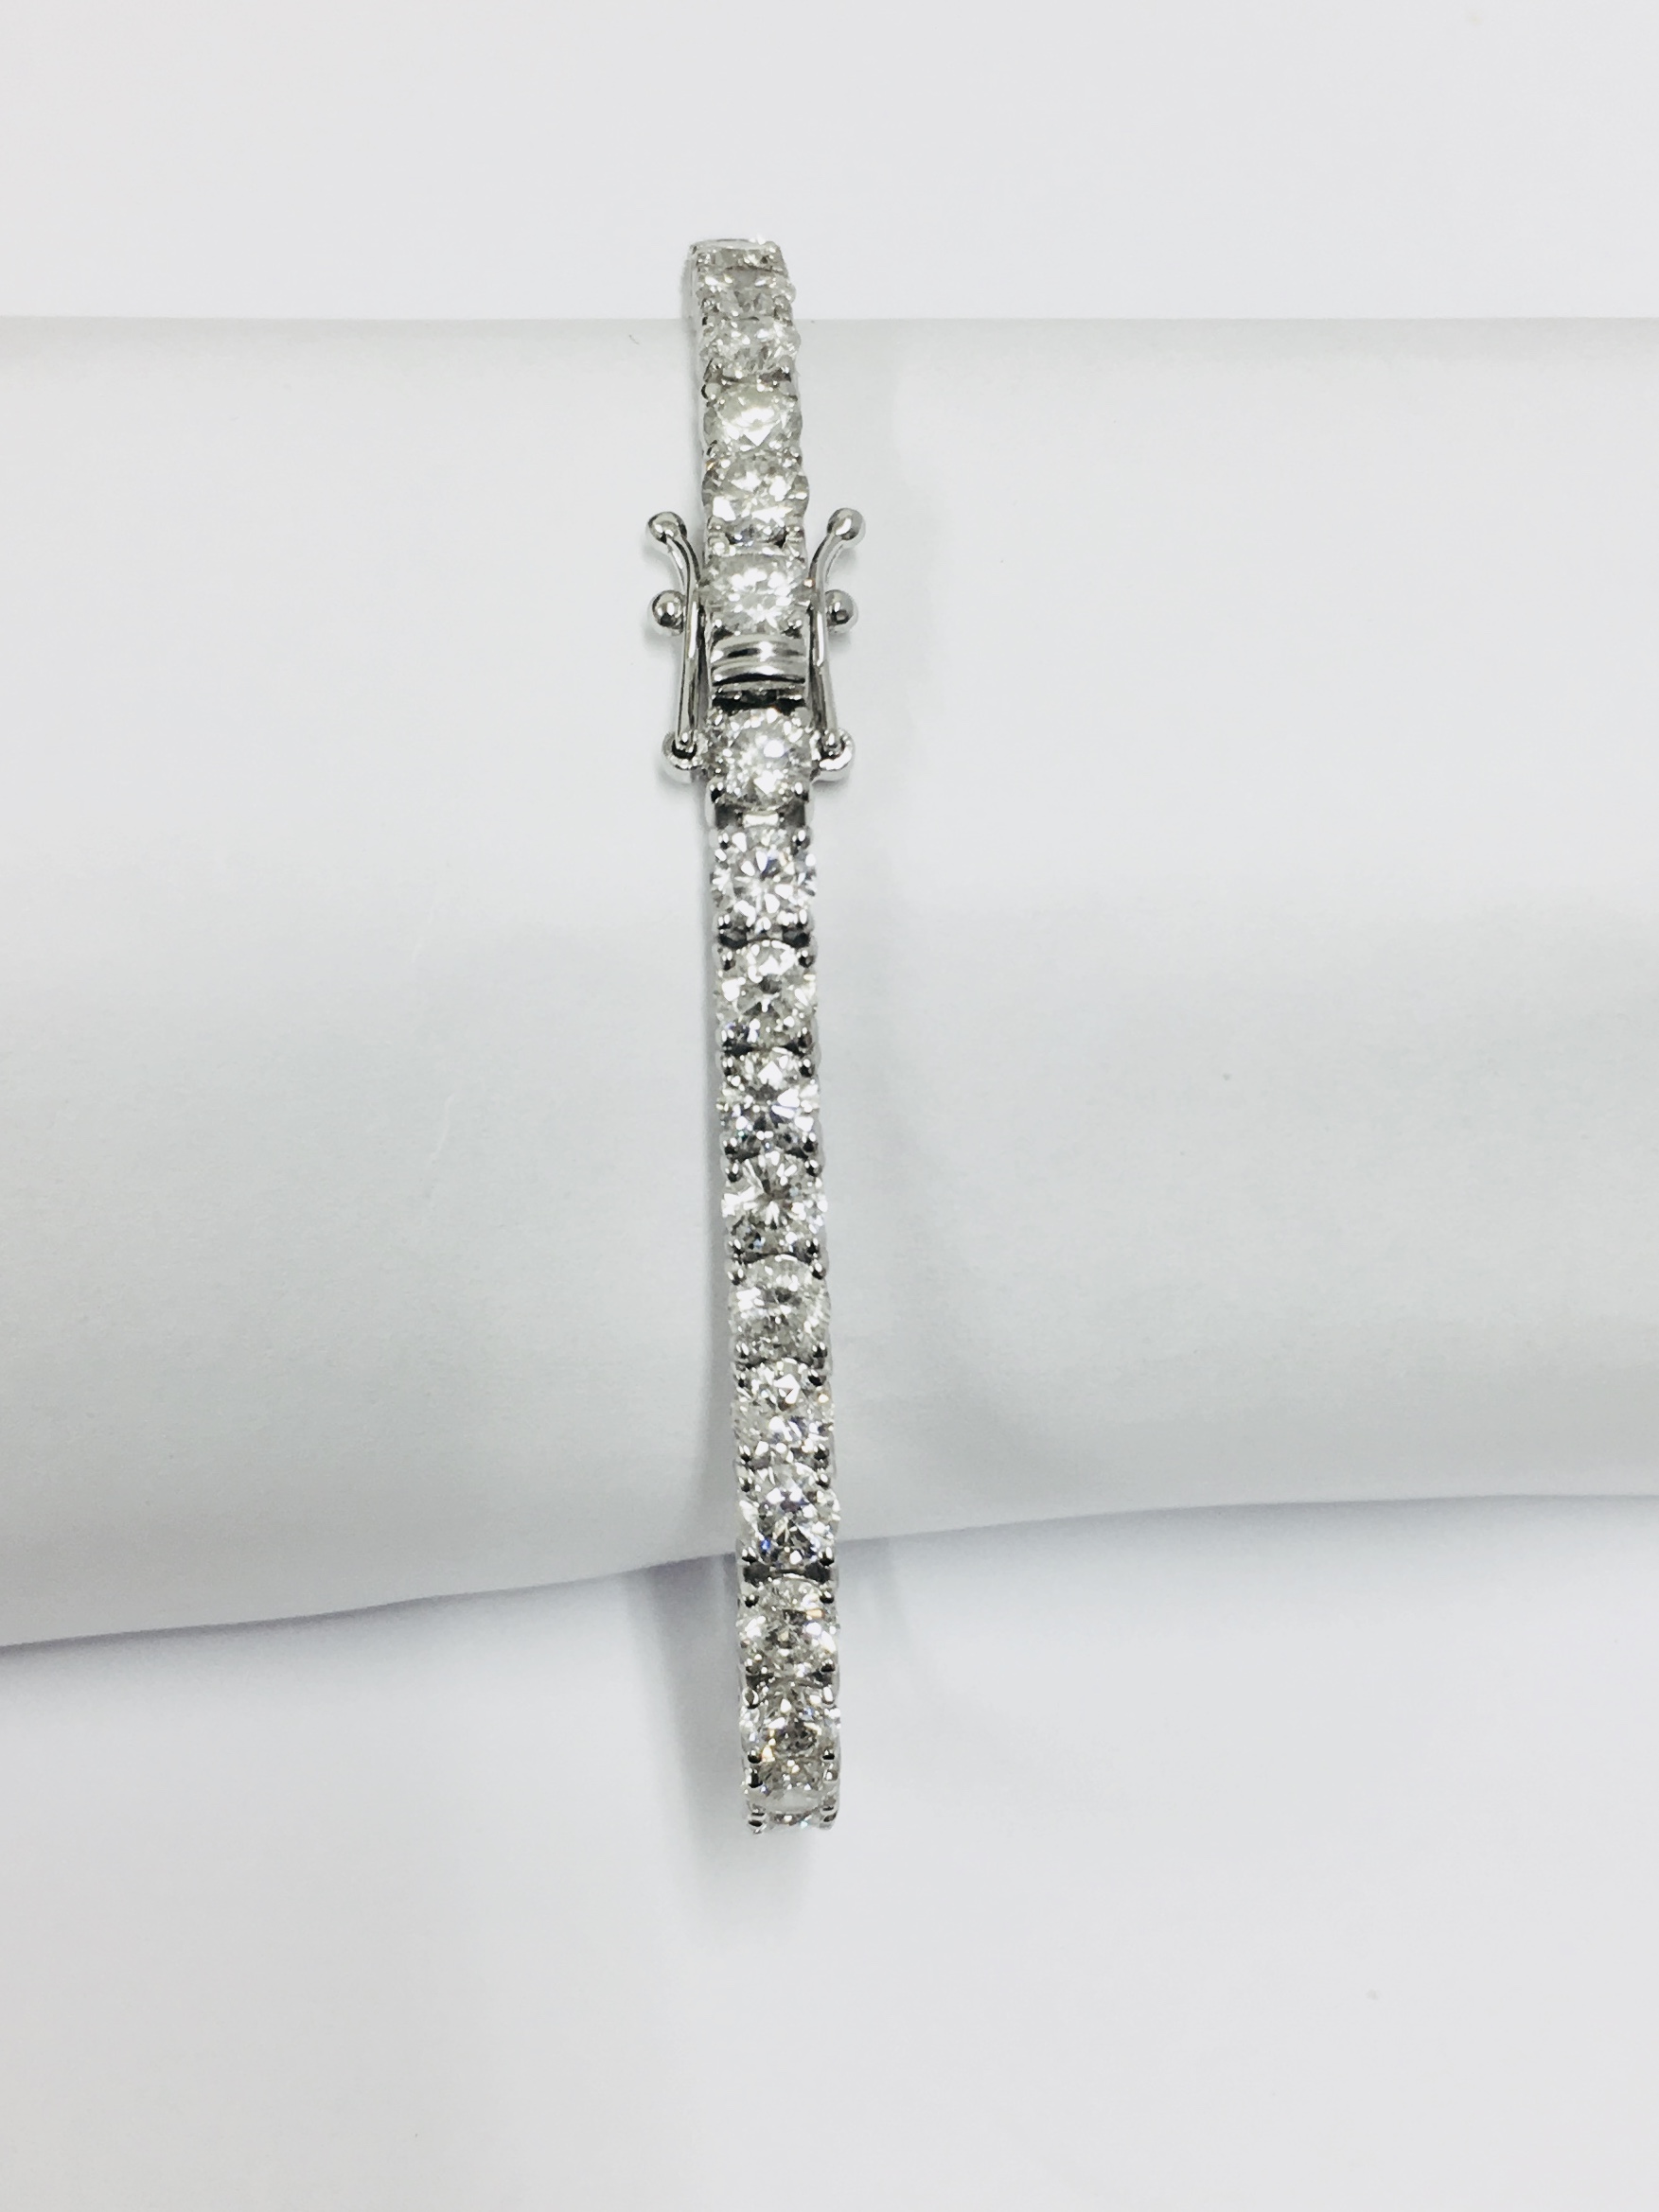 8.00ct Diamond tennis bracelet set with brilliant cut diamonds of G colour - Image 5 of 42